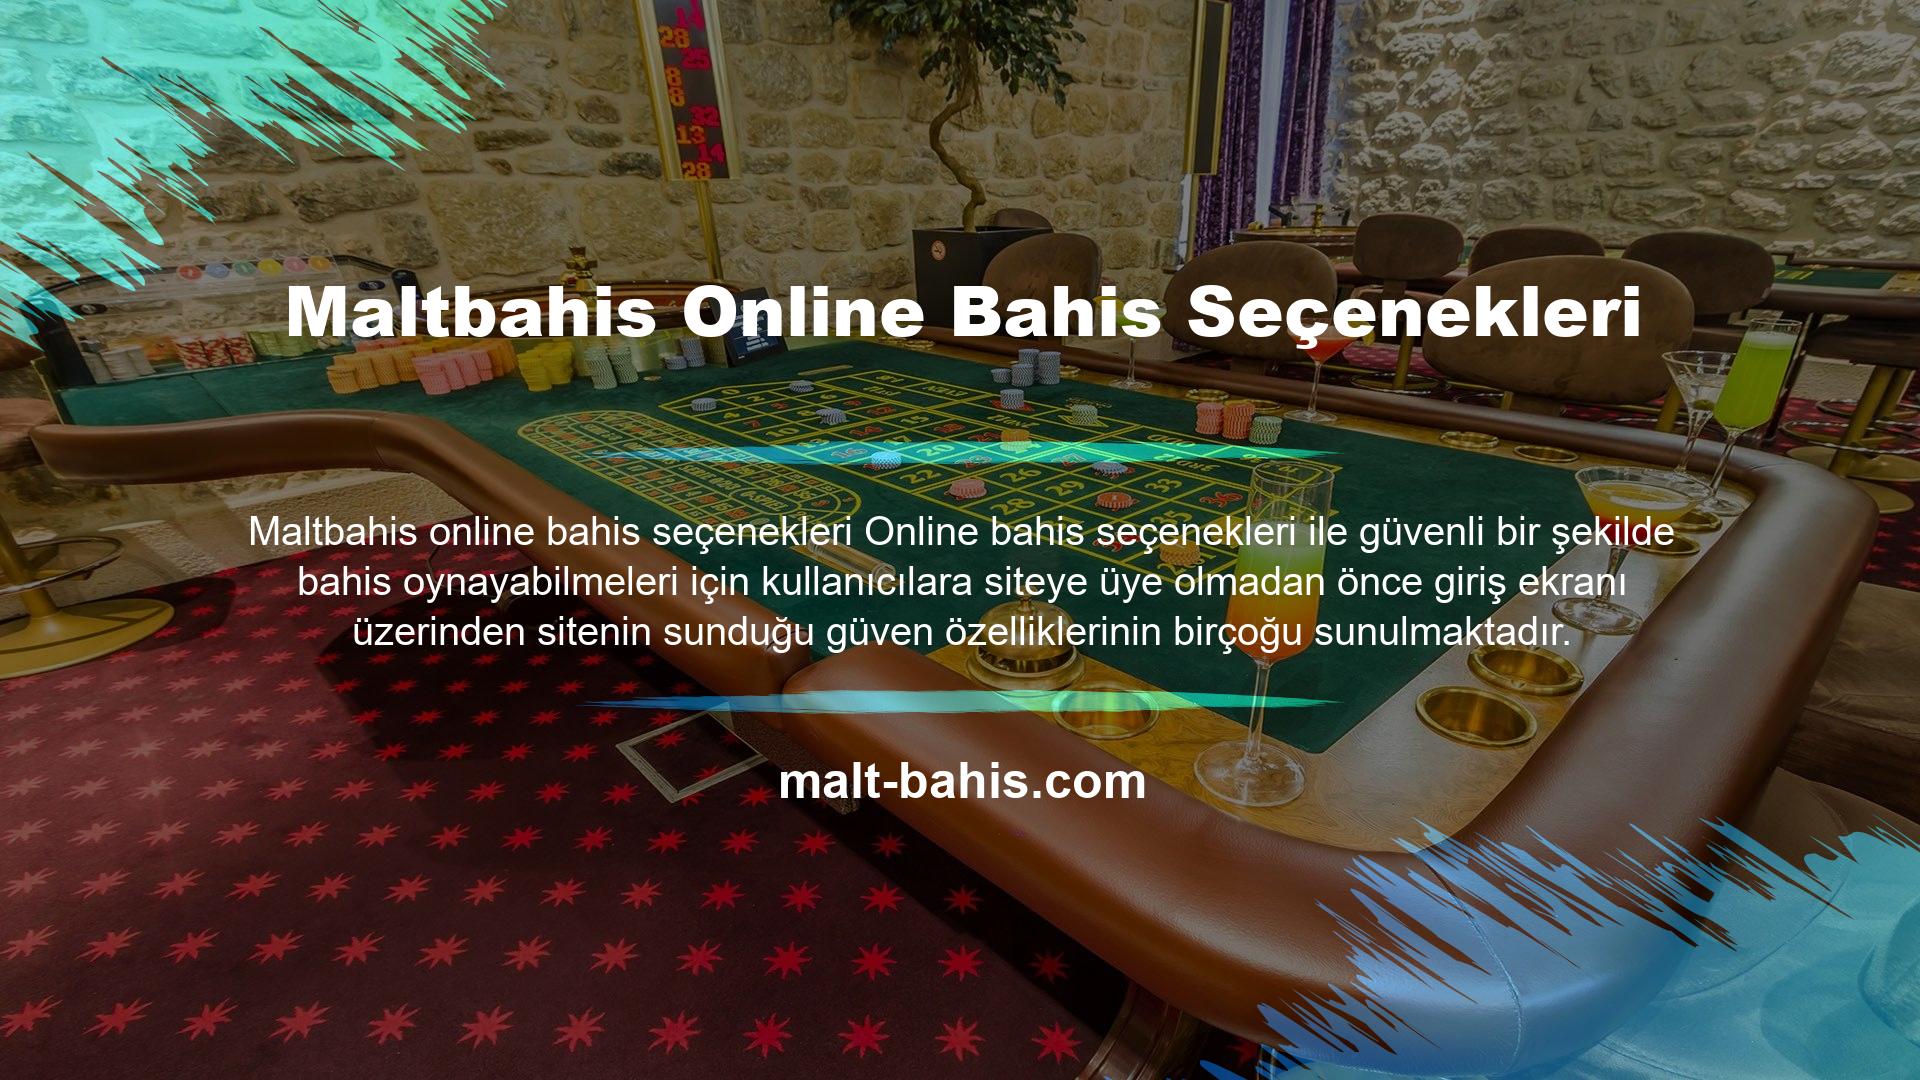 Maltbahis Online Bahis Seçenekleri